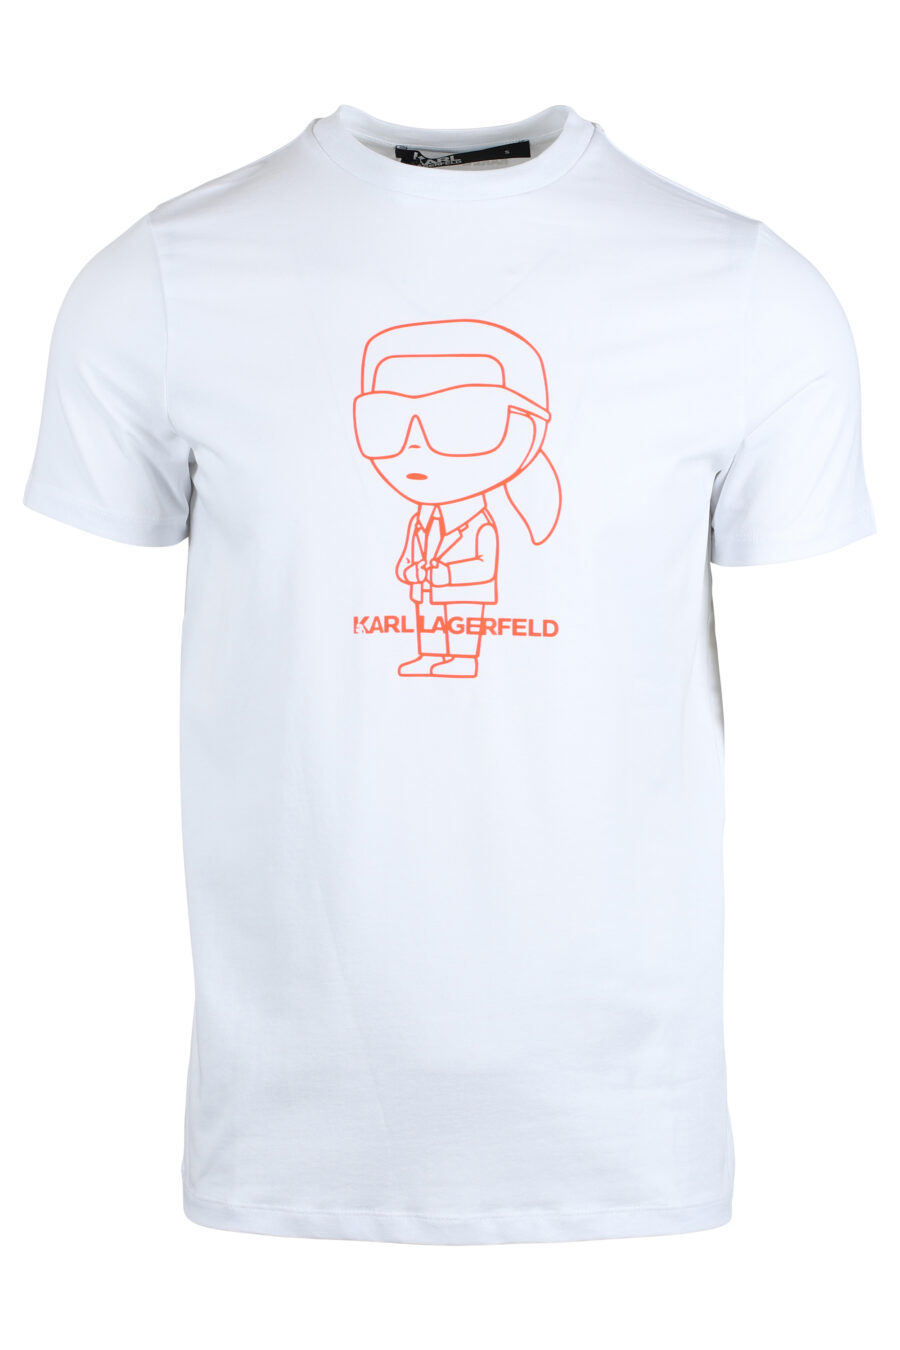 Camiseta blanca con maxilogo "karl" en silueta naranja - IMG 4758